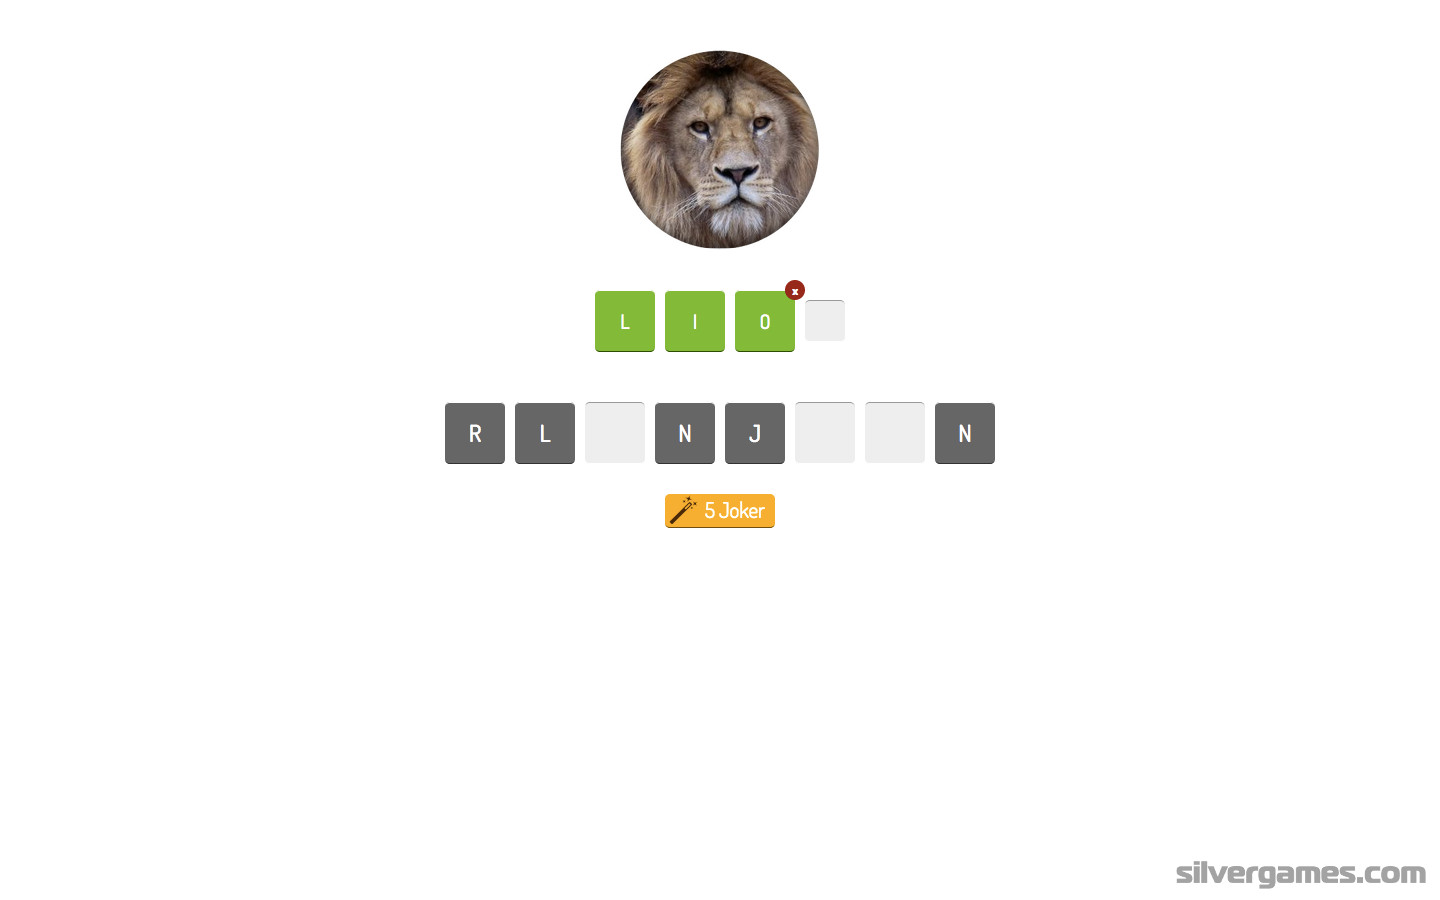 Animal Quiz - Online Pet and Wild Animal Quiz Game